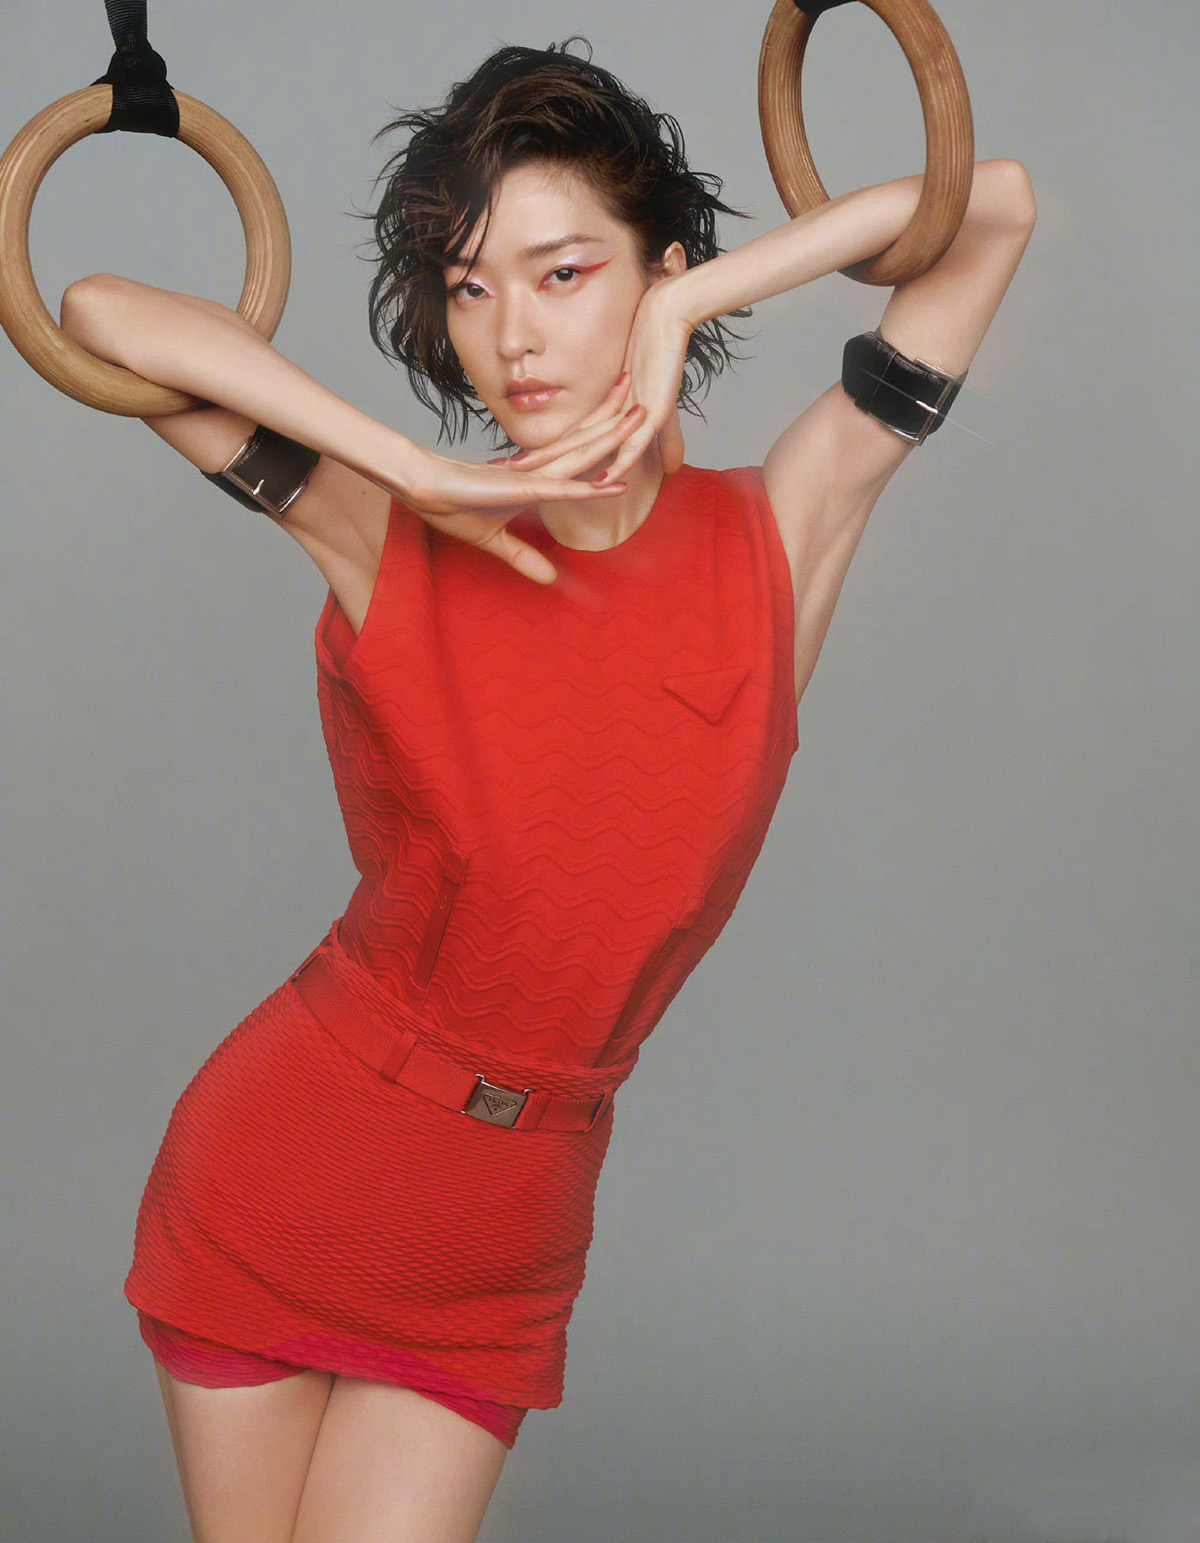 Du Juan covers Vogue China February 2022 by Liu Song